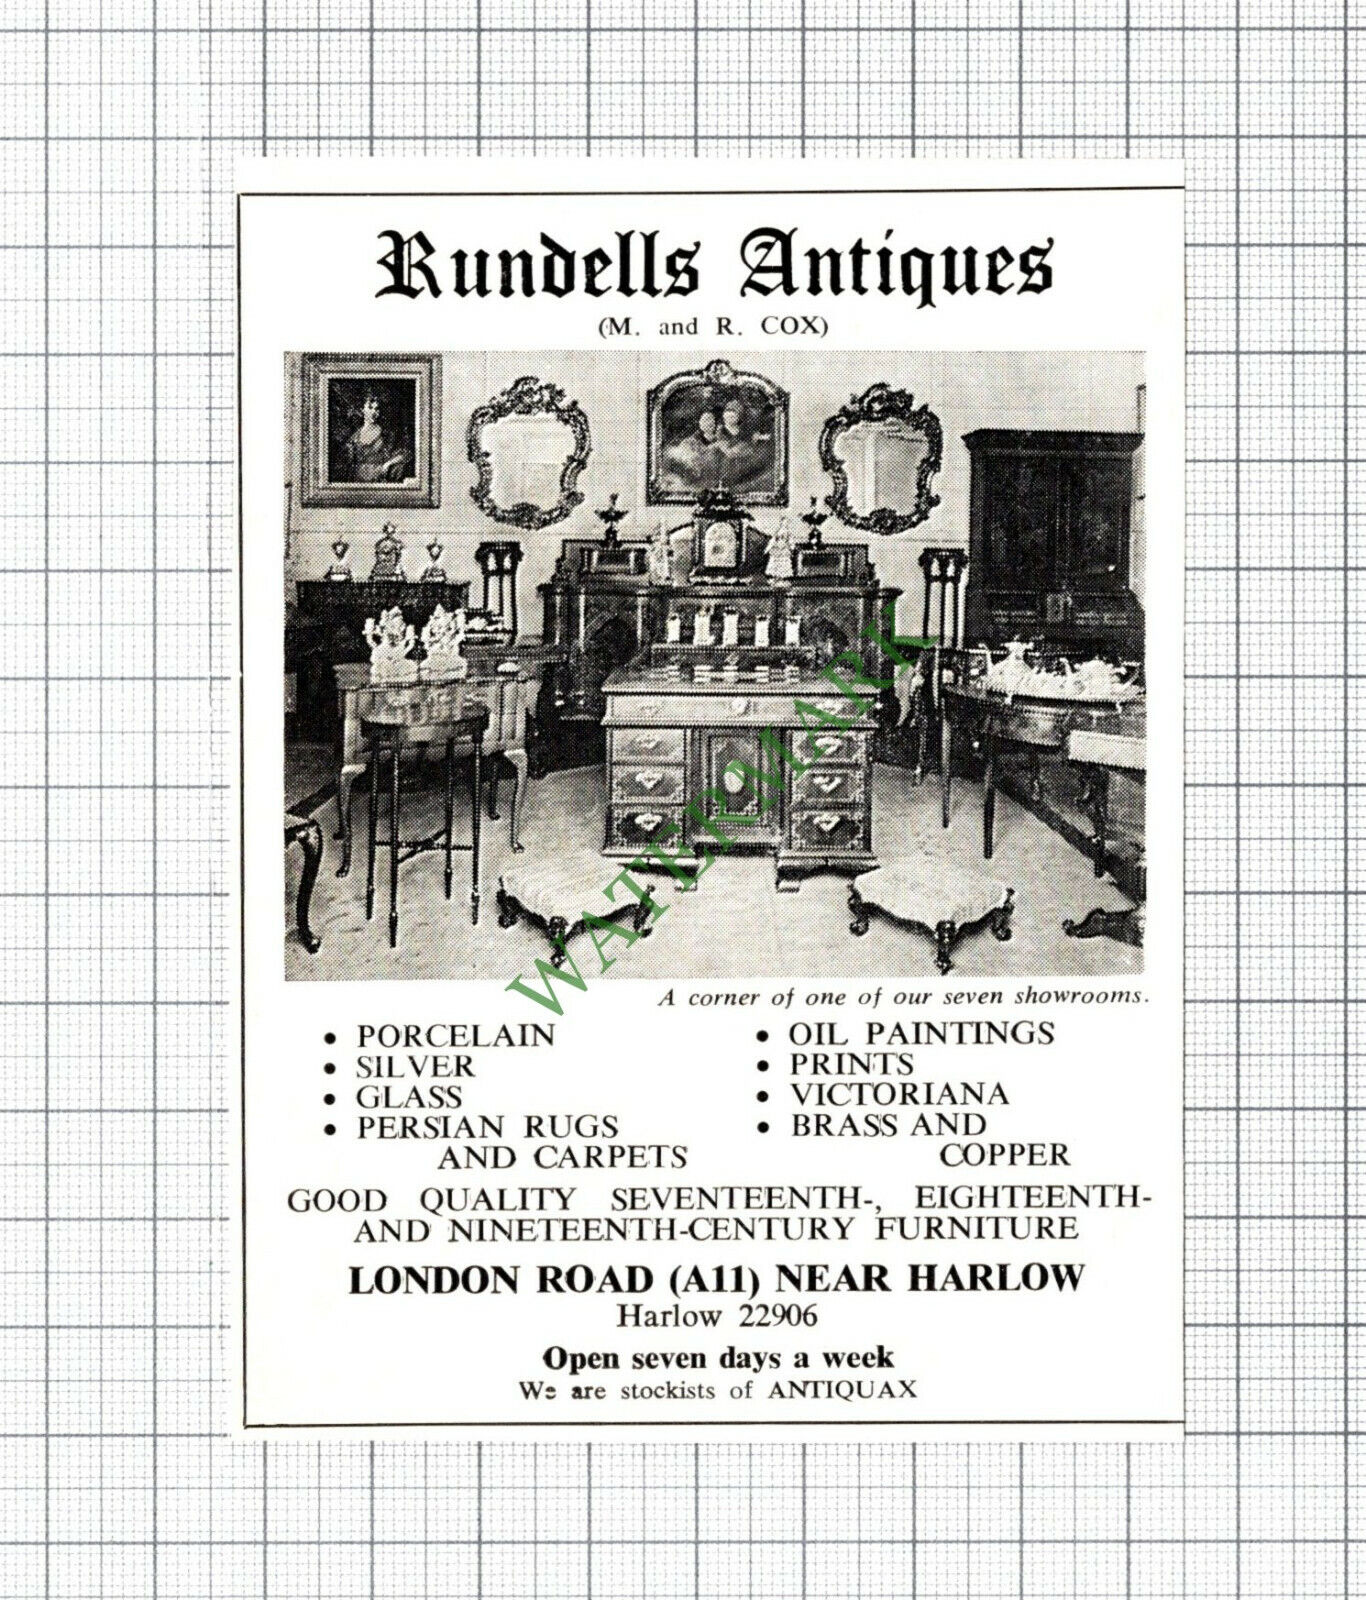 Rundells Antiques Harlow Essex Small Advert - 1972 Cutting